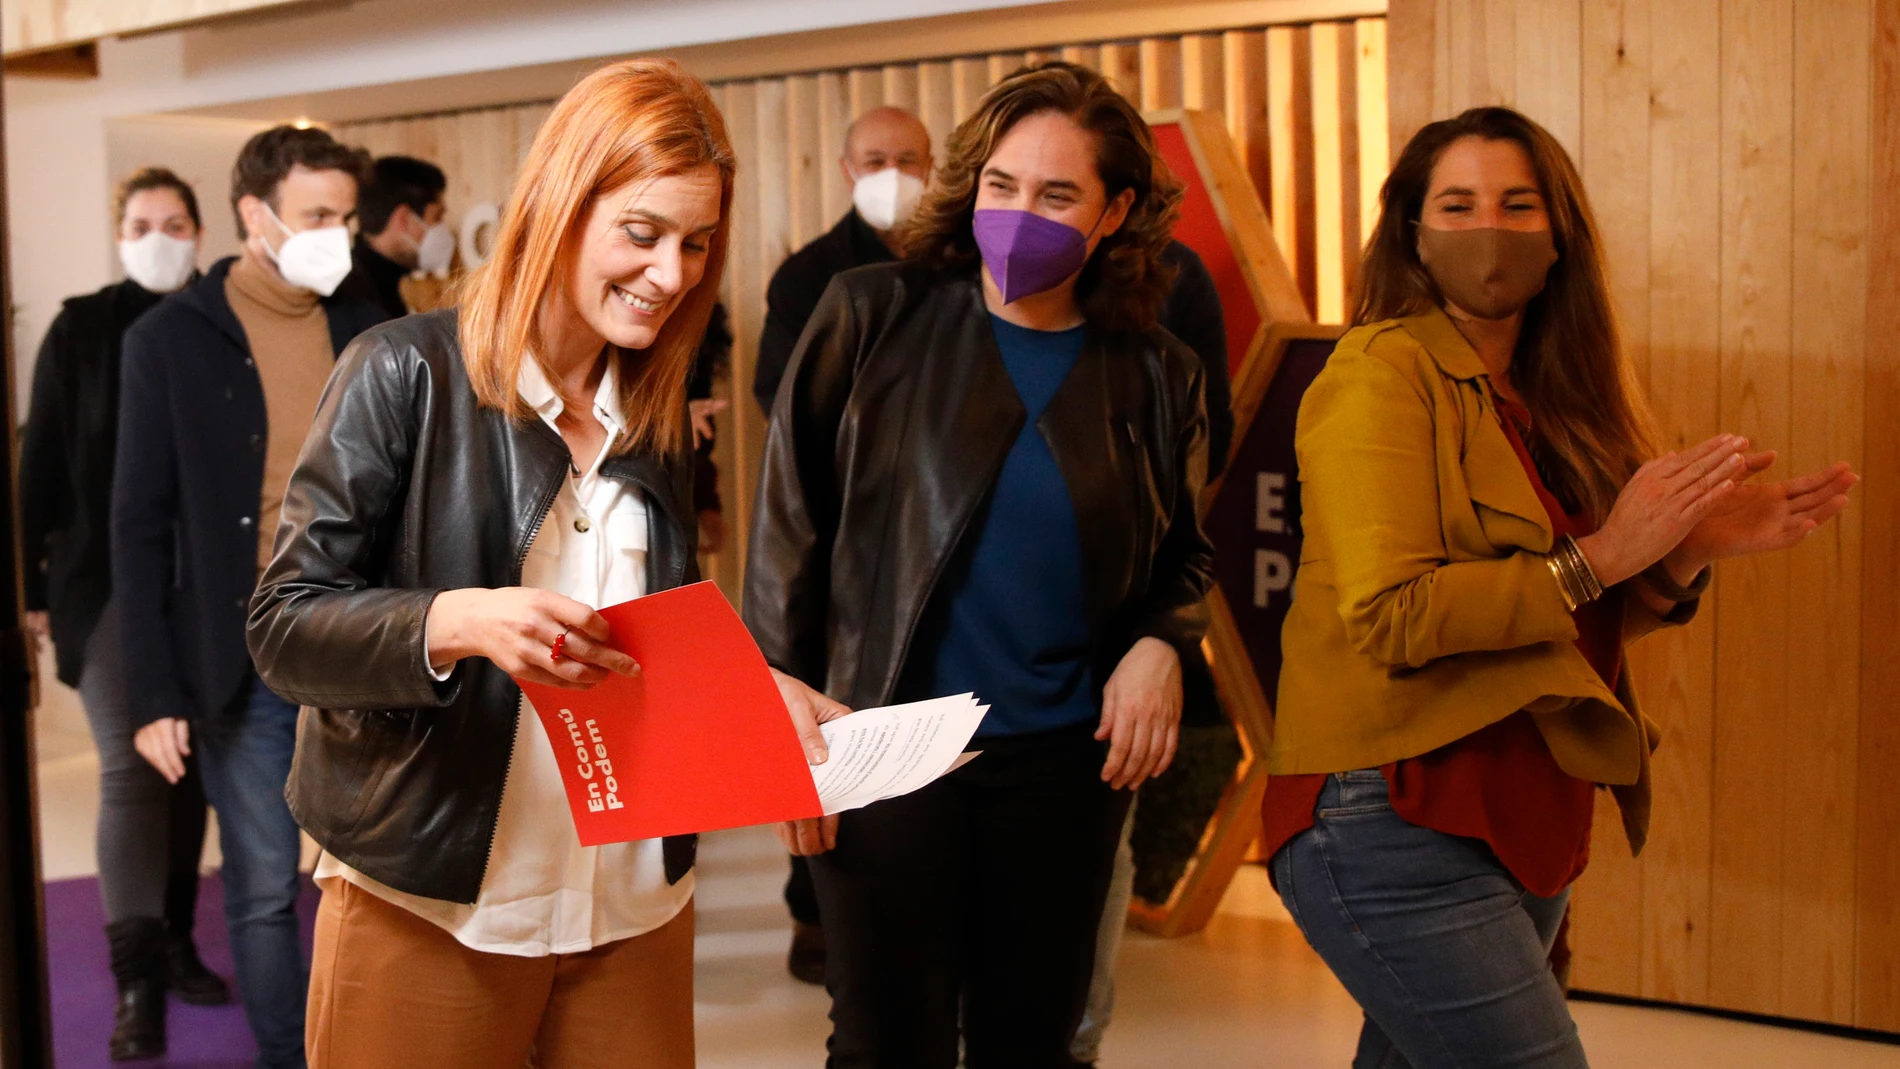 La candidata de los comuns, Jéssica Albiach, junto a la alcaldesa de Barcelona, Ada Colau, y dirigentes del partido, tras valorar la jornada electoral del 14F.KIKE RINCÓN - EUROPA PRESS14/02/2021